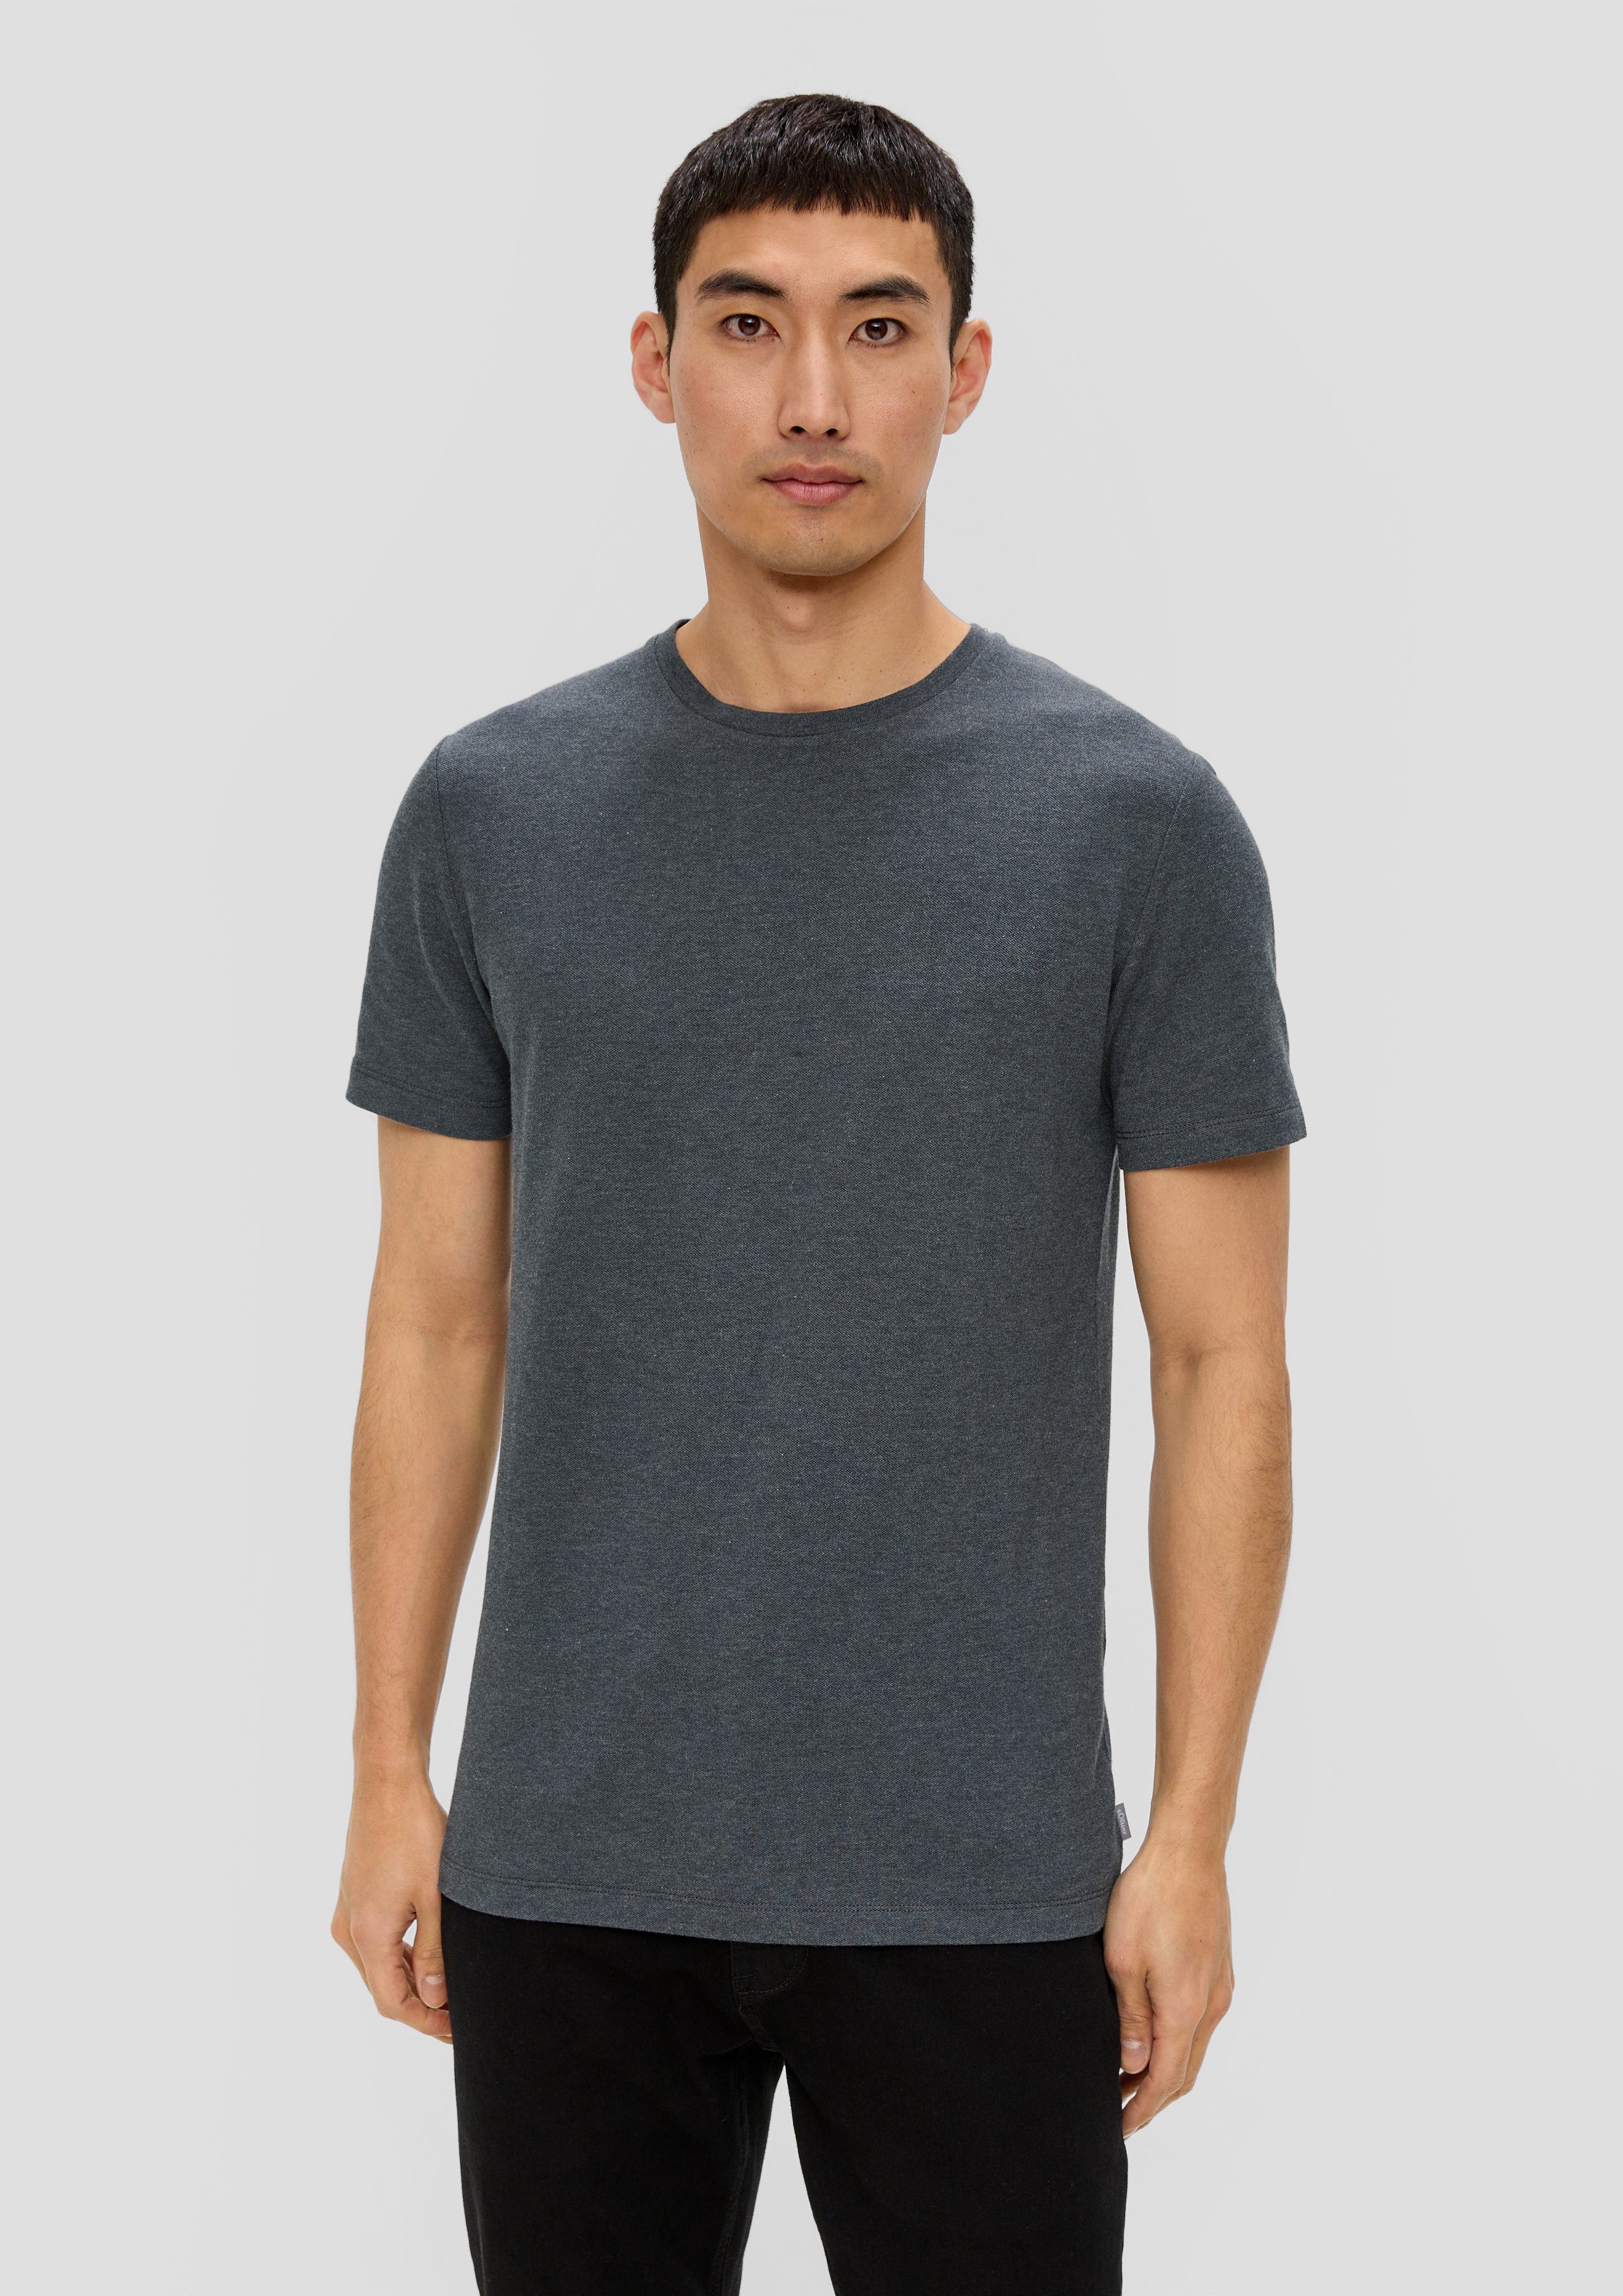 s.Oliver Kurzarmshirt T-Shirt mit Piqué-Struktur Blende dunkelgrau